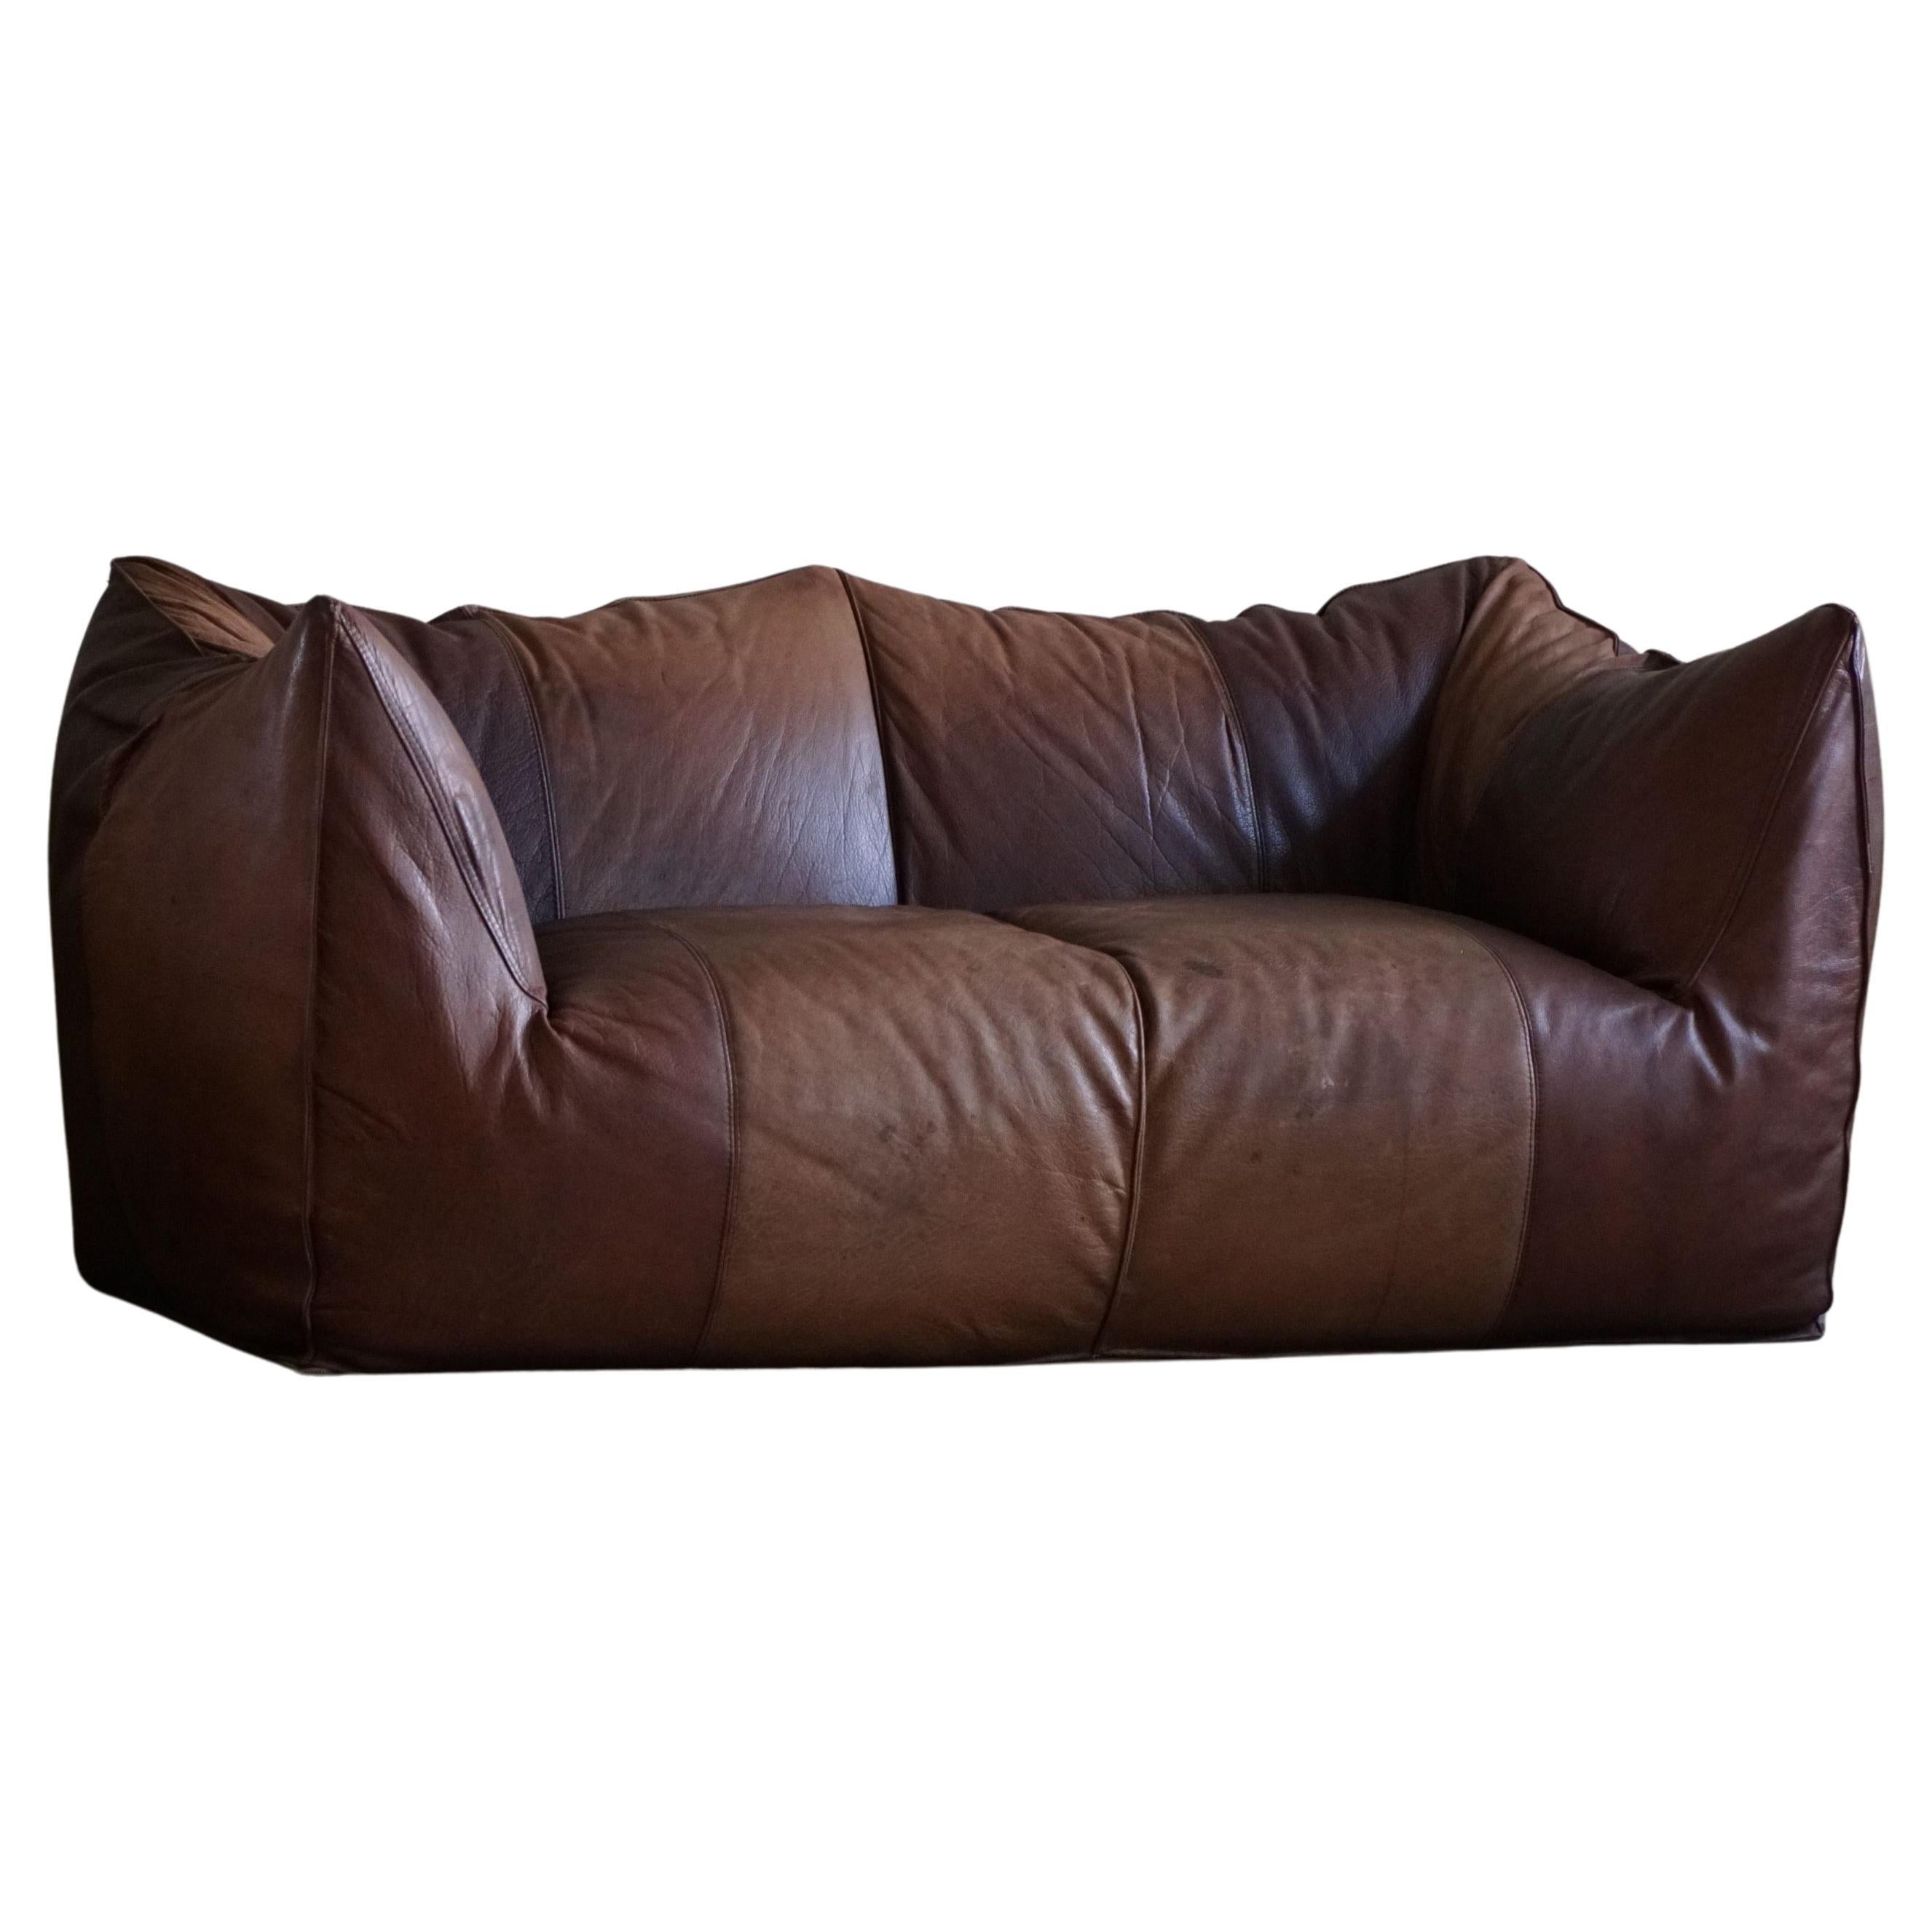 How do you maintain a velvet couch?